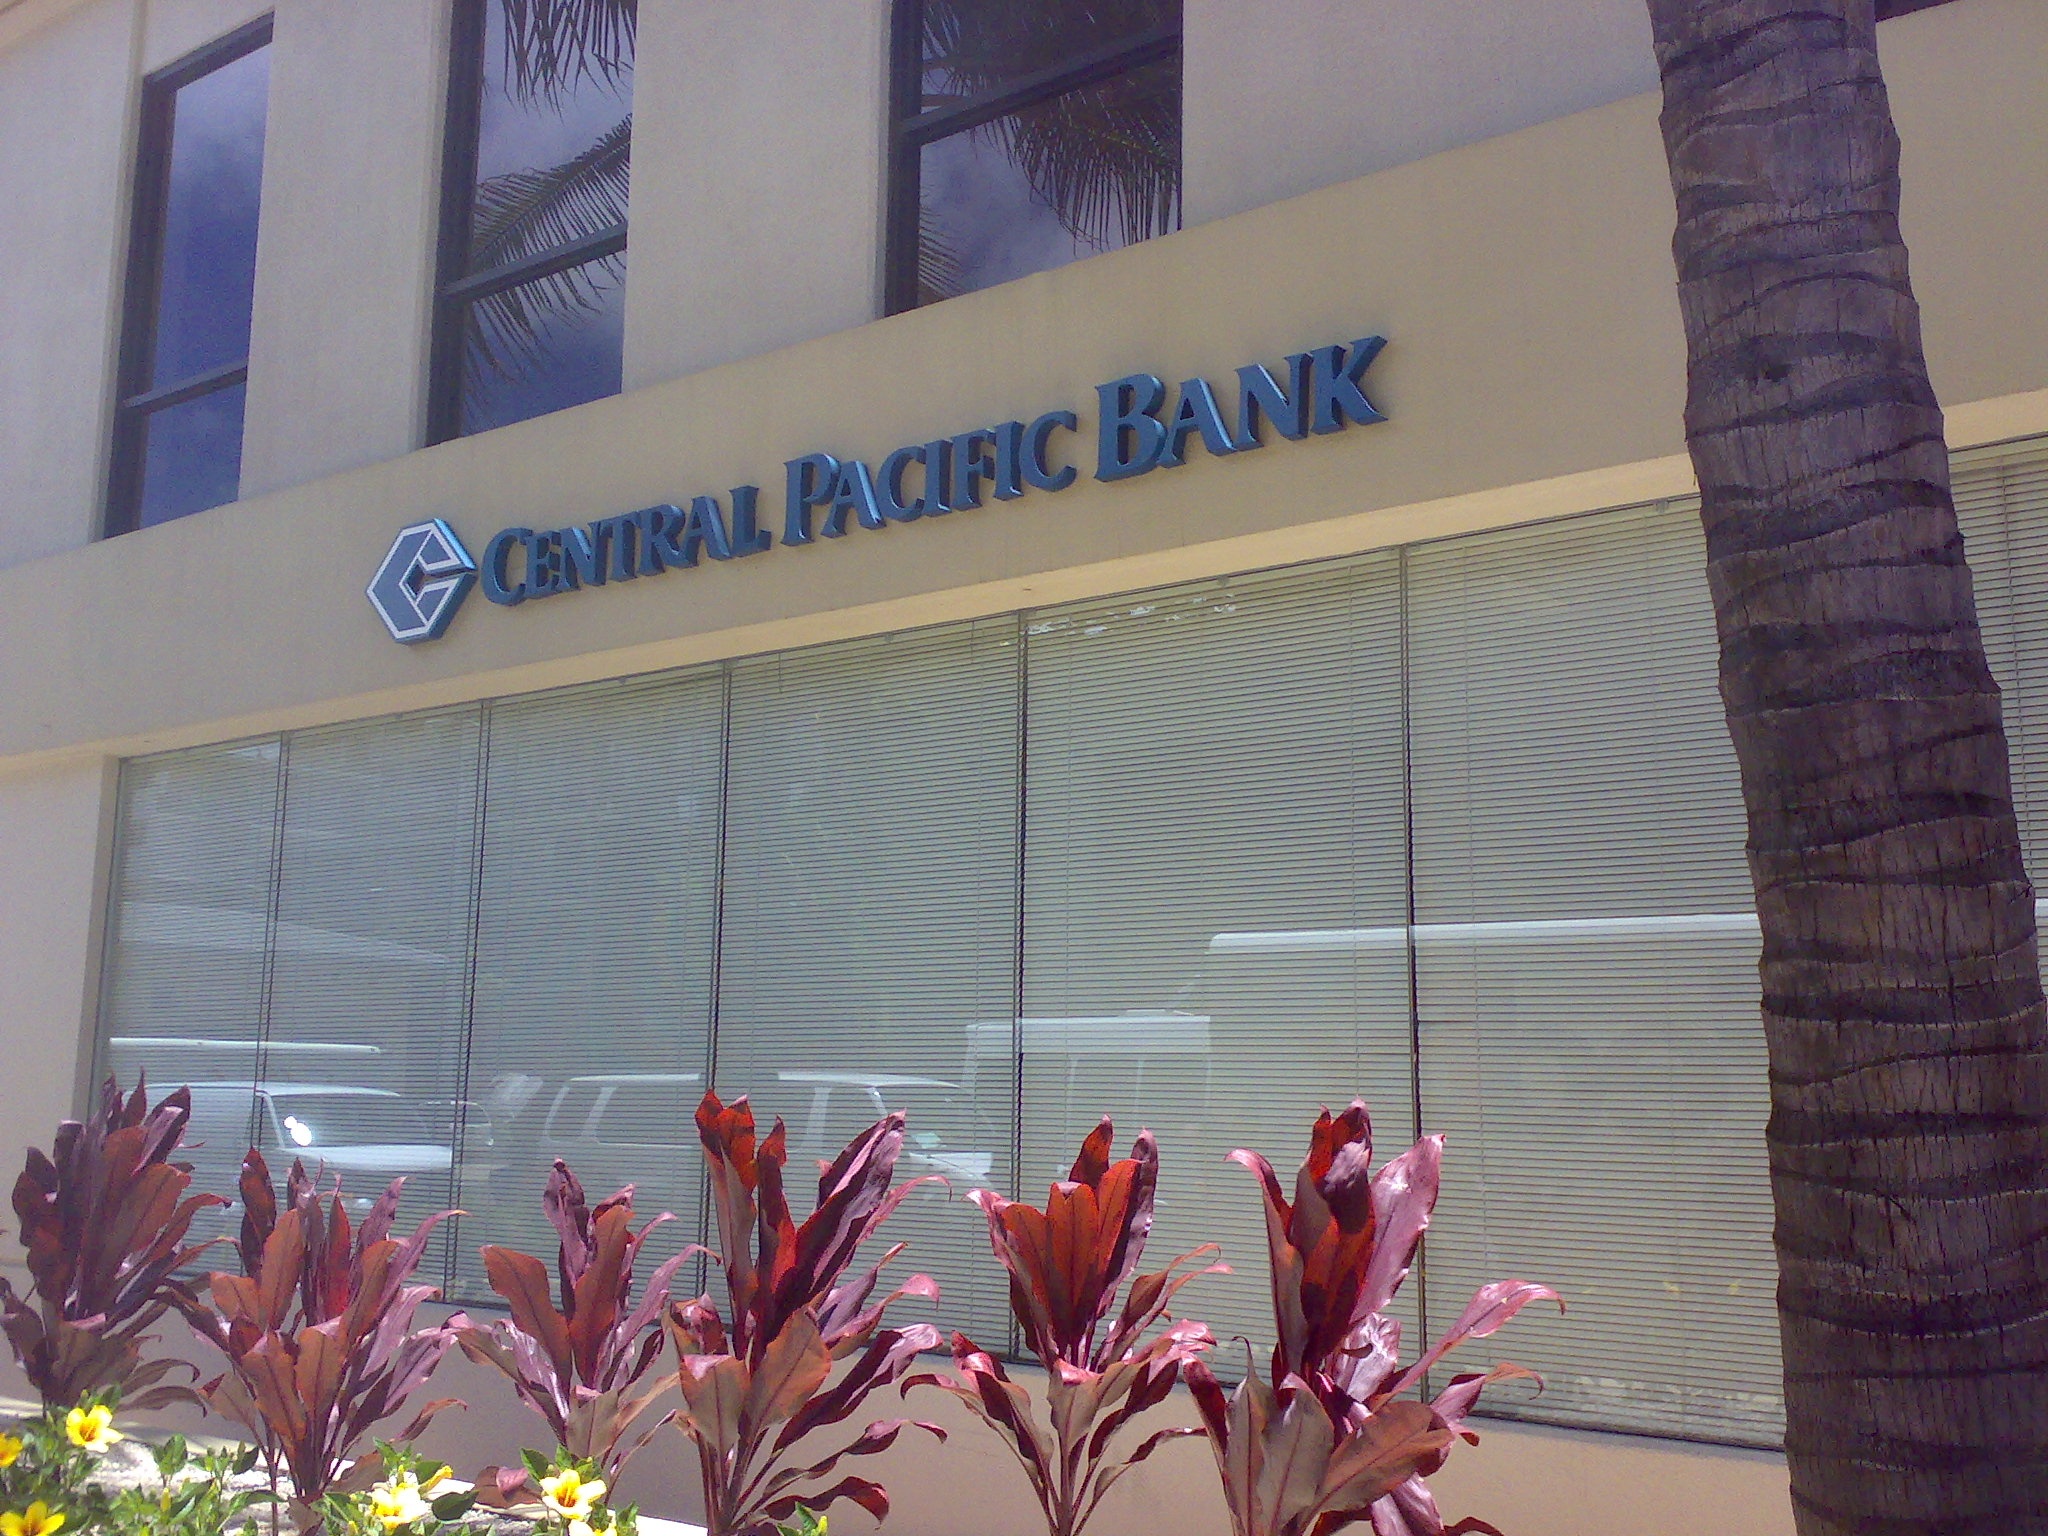 Central Pacific Bank’s aggravation / セントラル・パシフィック・バンクの改悪